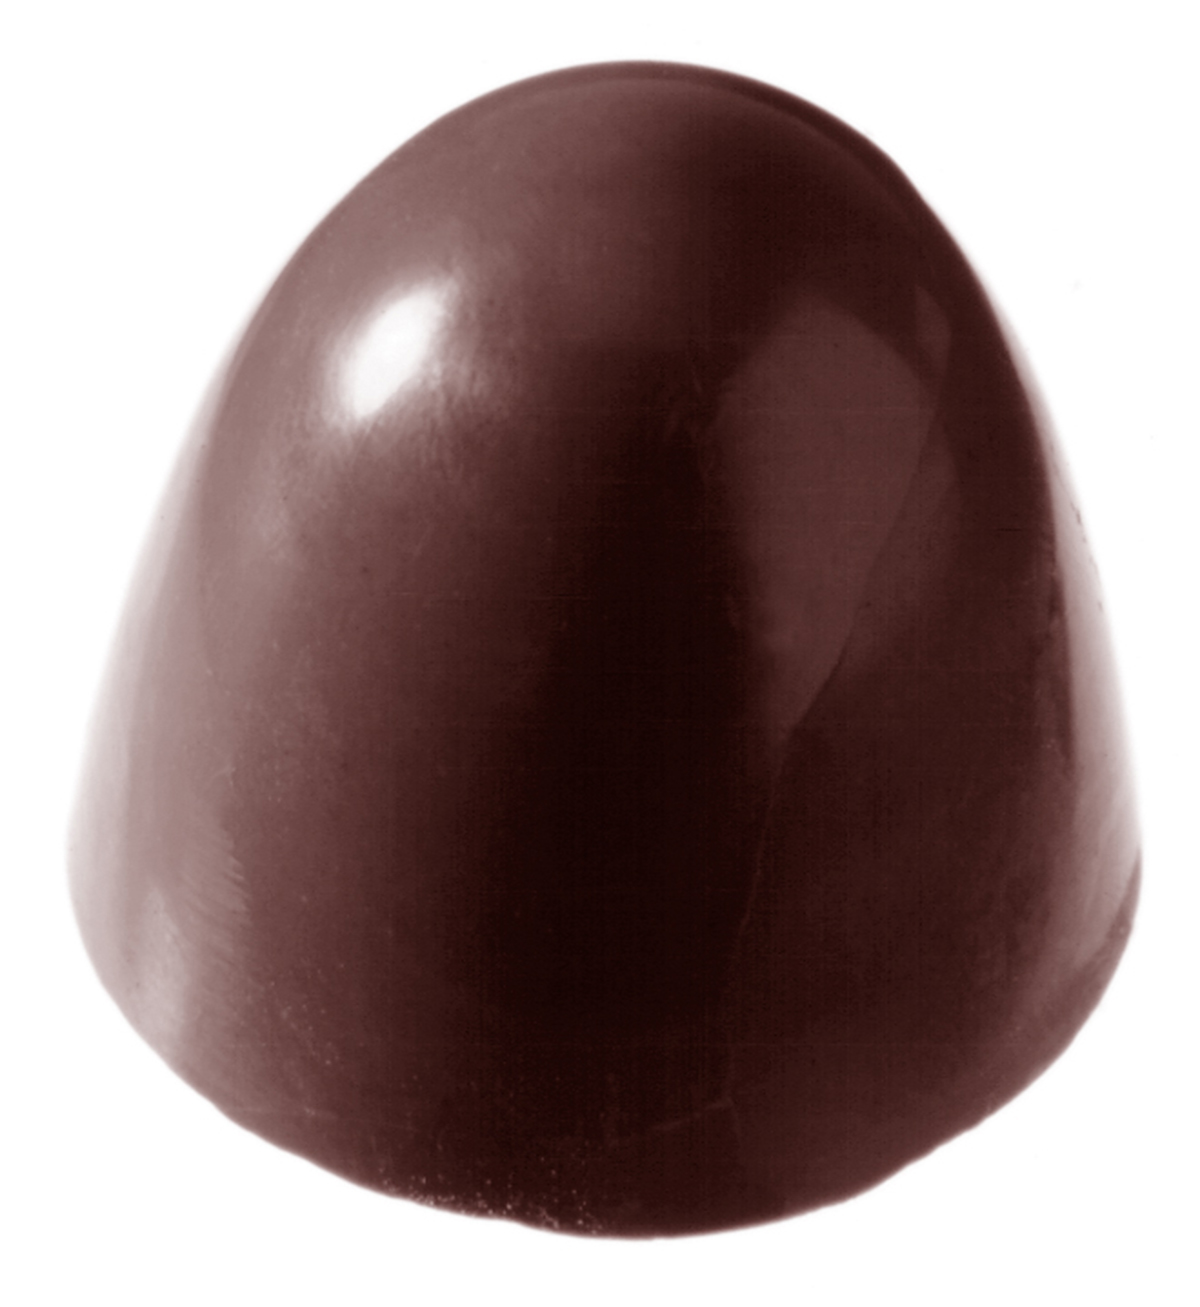 Professionel chokoladeform i polycarbonat - Flødebolle CW1291